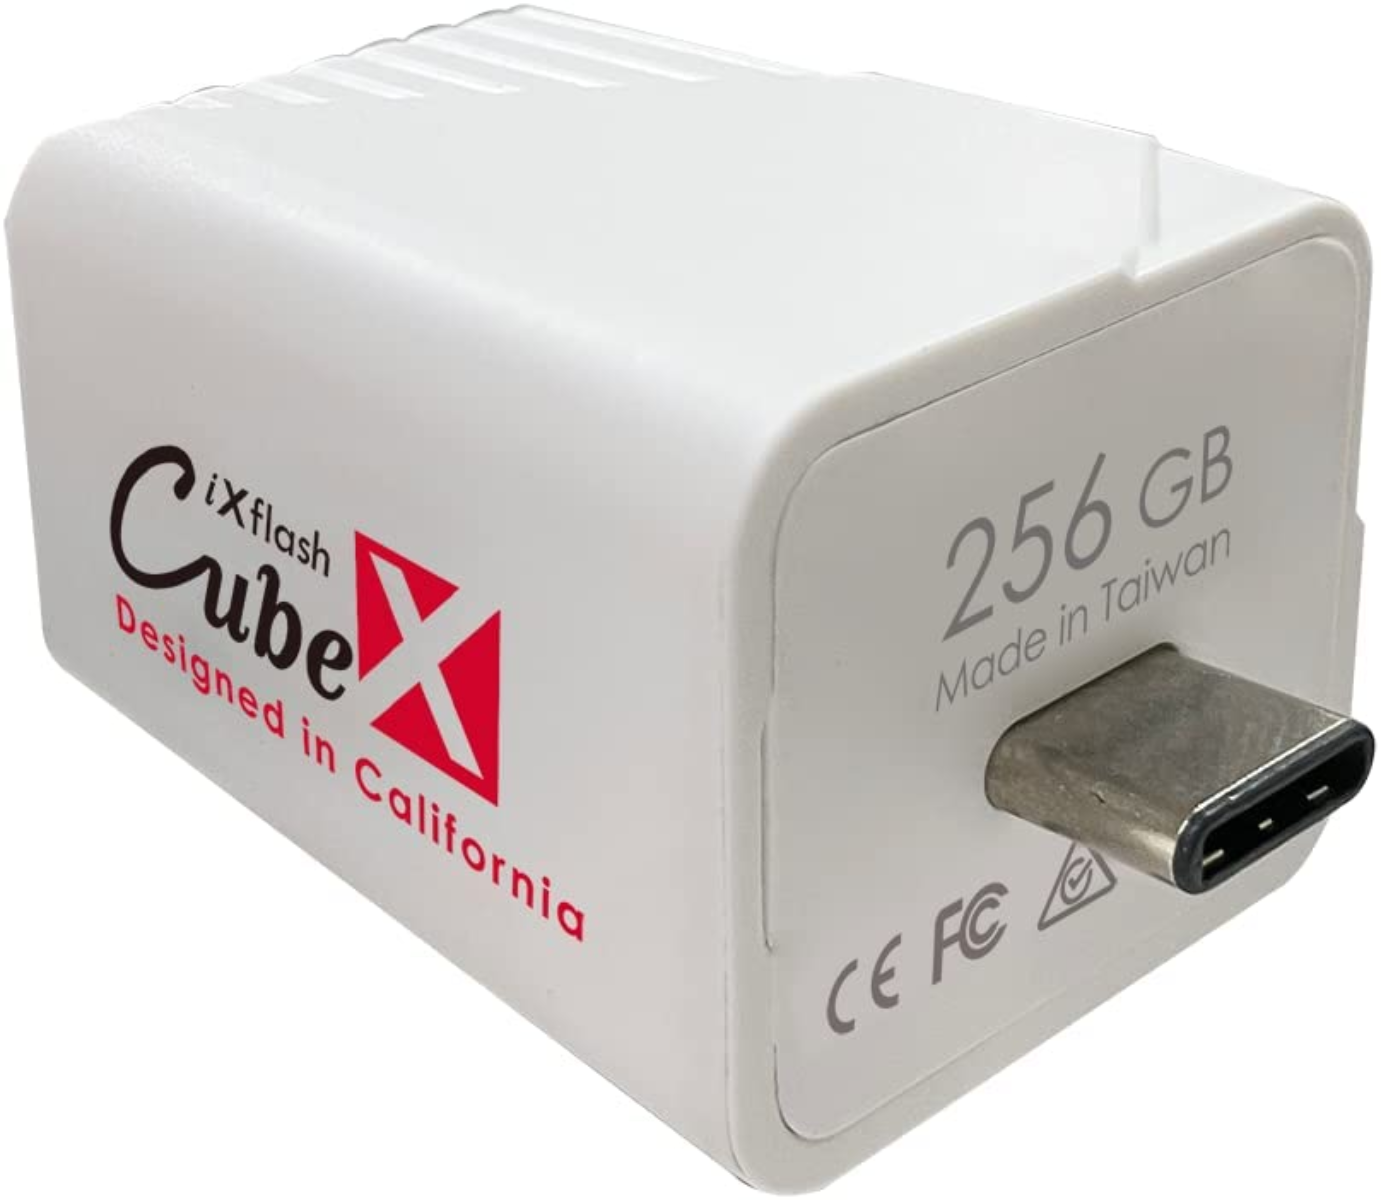 256 Cube iXflash PIODATA USB-C (Weiß, GB)